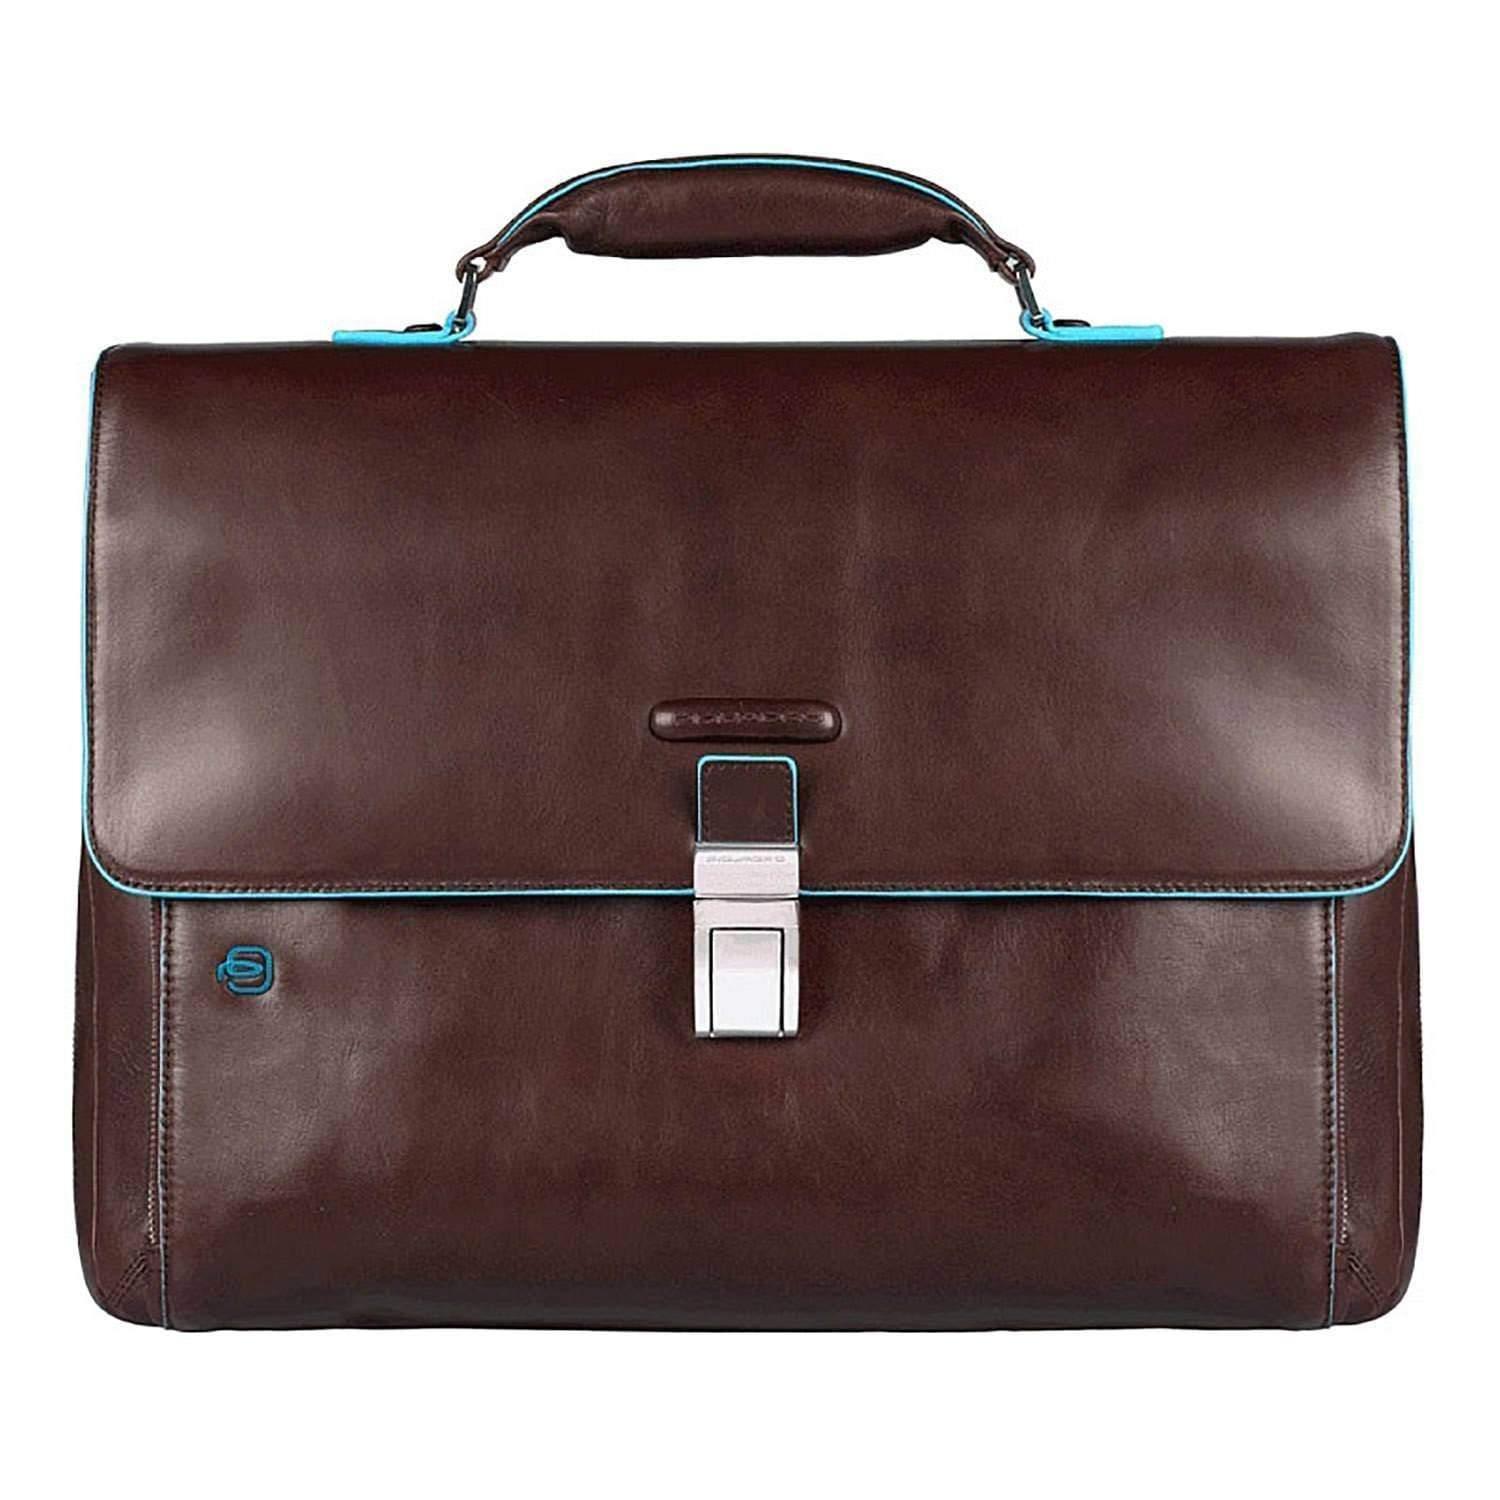 Piquadro Blue Square Leather Briefcase with Flap Closure - Mahogany - CA3111B2/MO